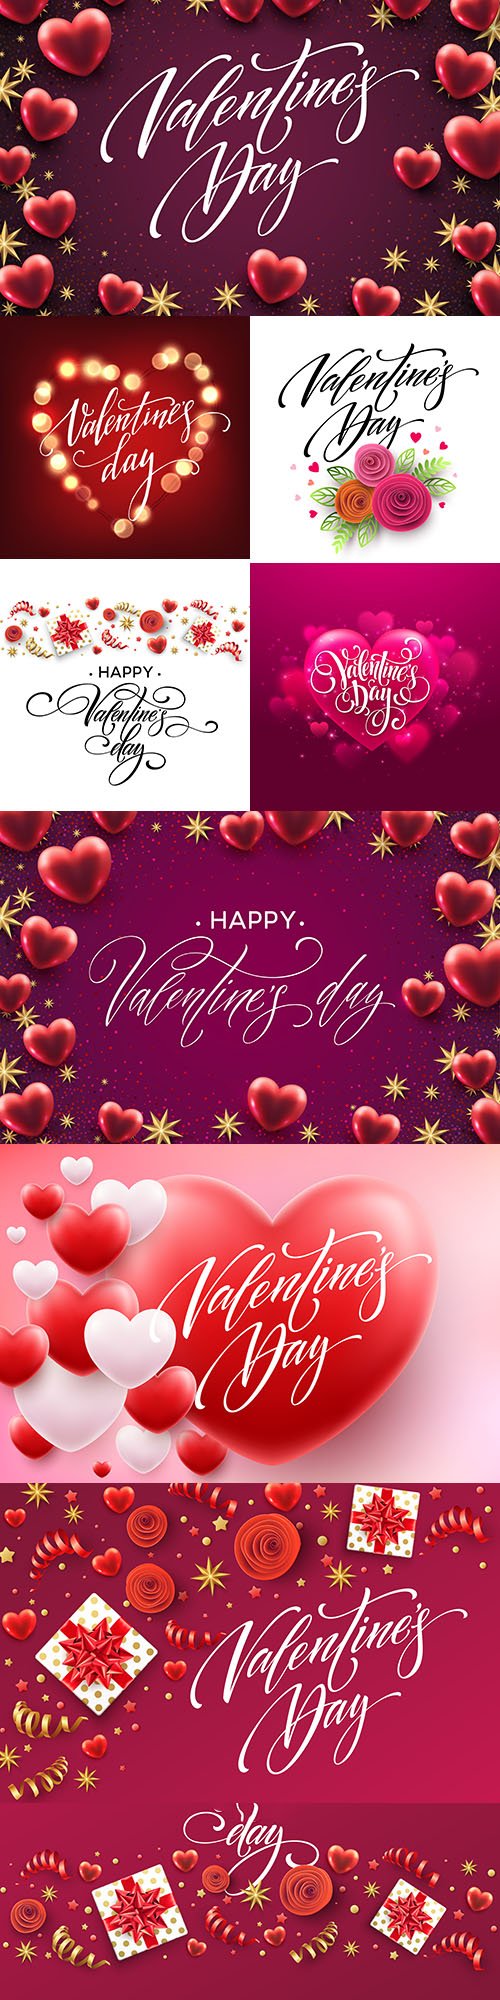 Happy Valentine's Day romantic decorative illustrations 29